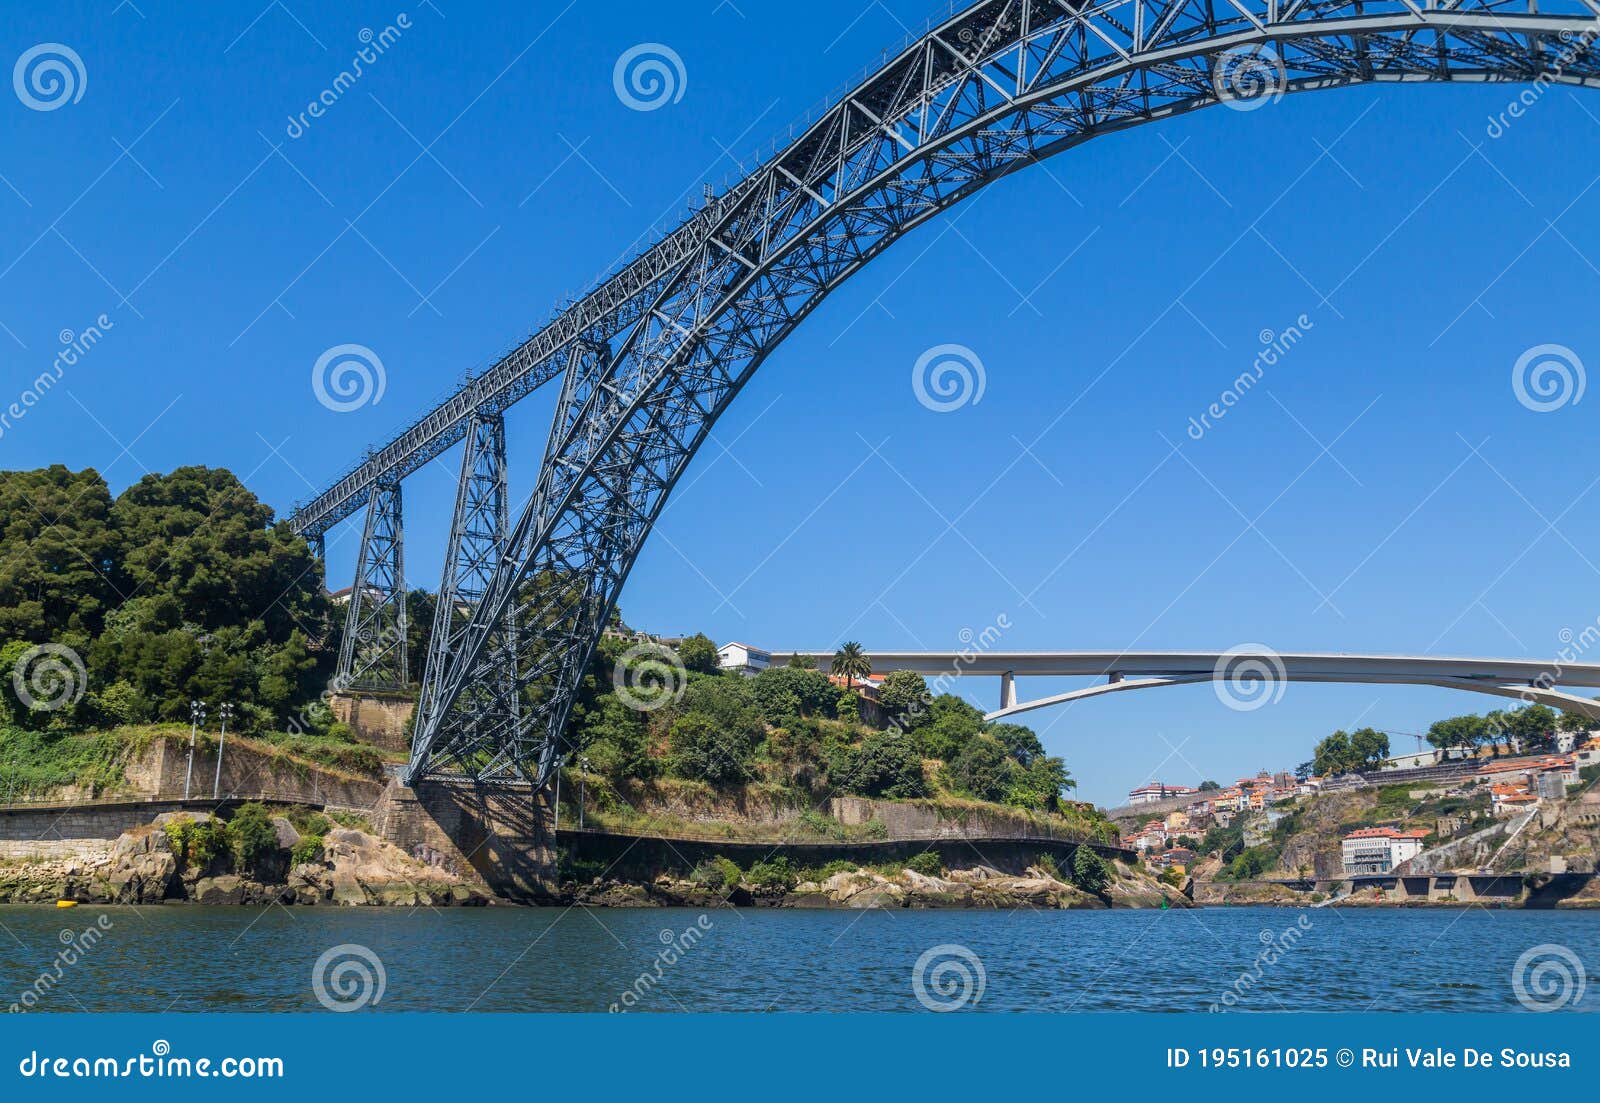 maria pia bridge over the douro